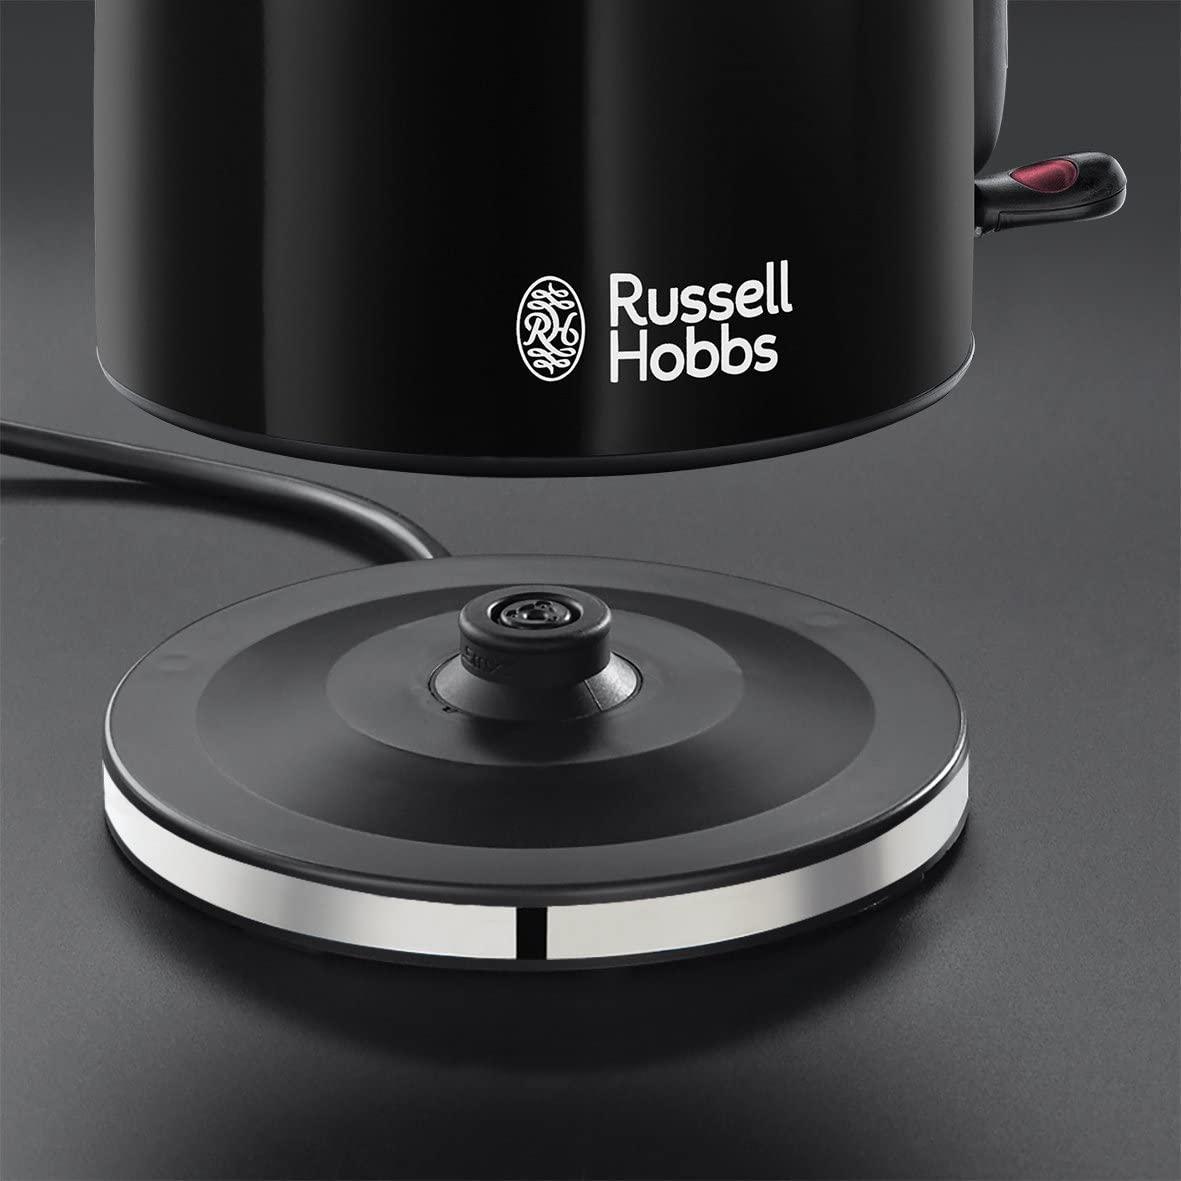 Russell Hobbs 20413 Colour Plus Kettle, Stainless Steel, 3000 W, 1.7 Litre, Black - Peter Murphy Lighting & Electrical Ltd